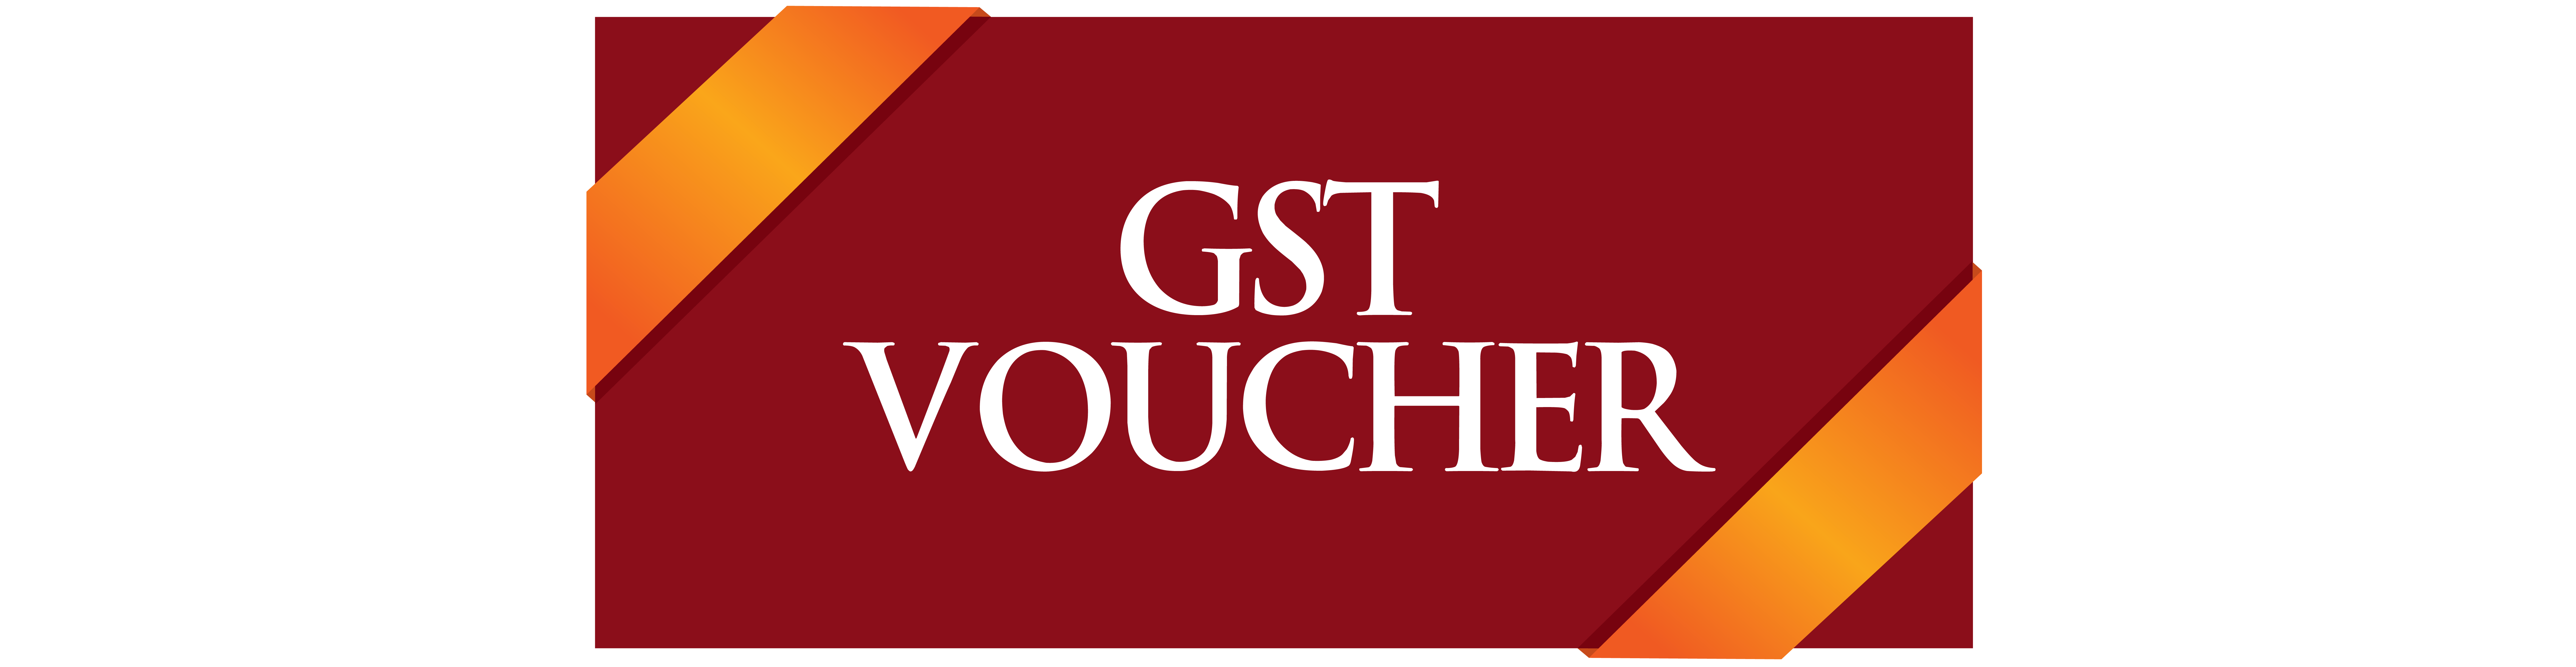 GST Voucher Logo